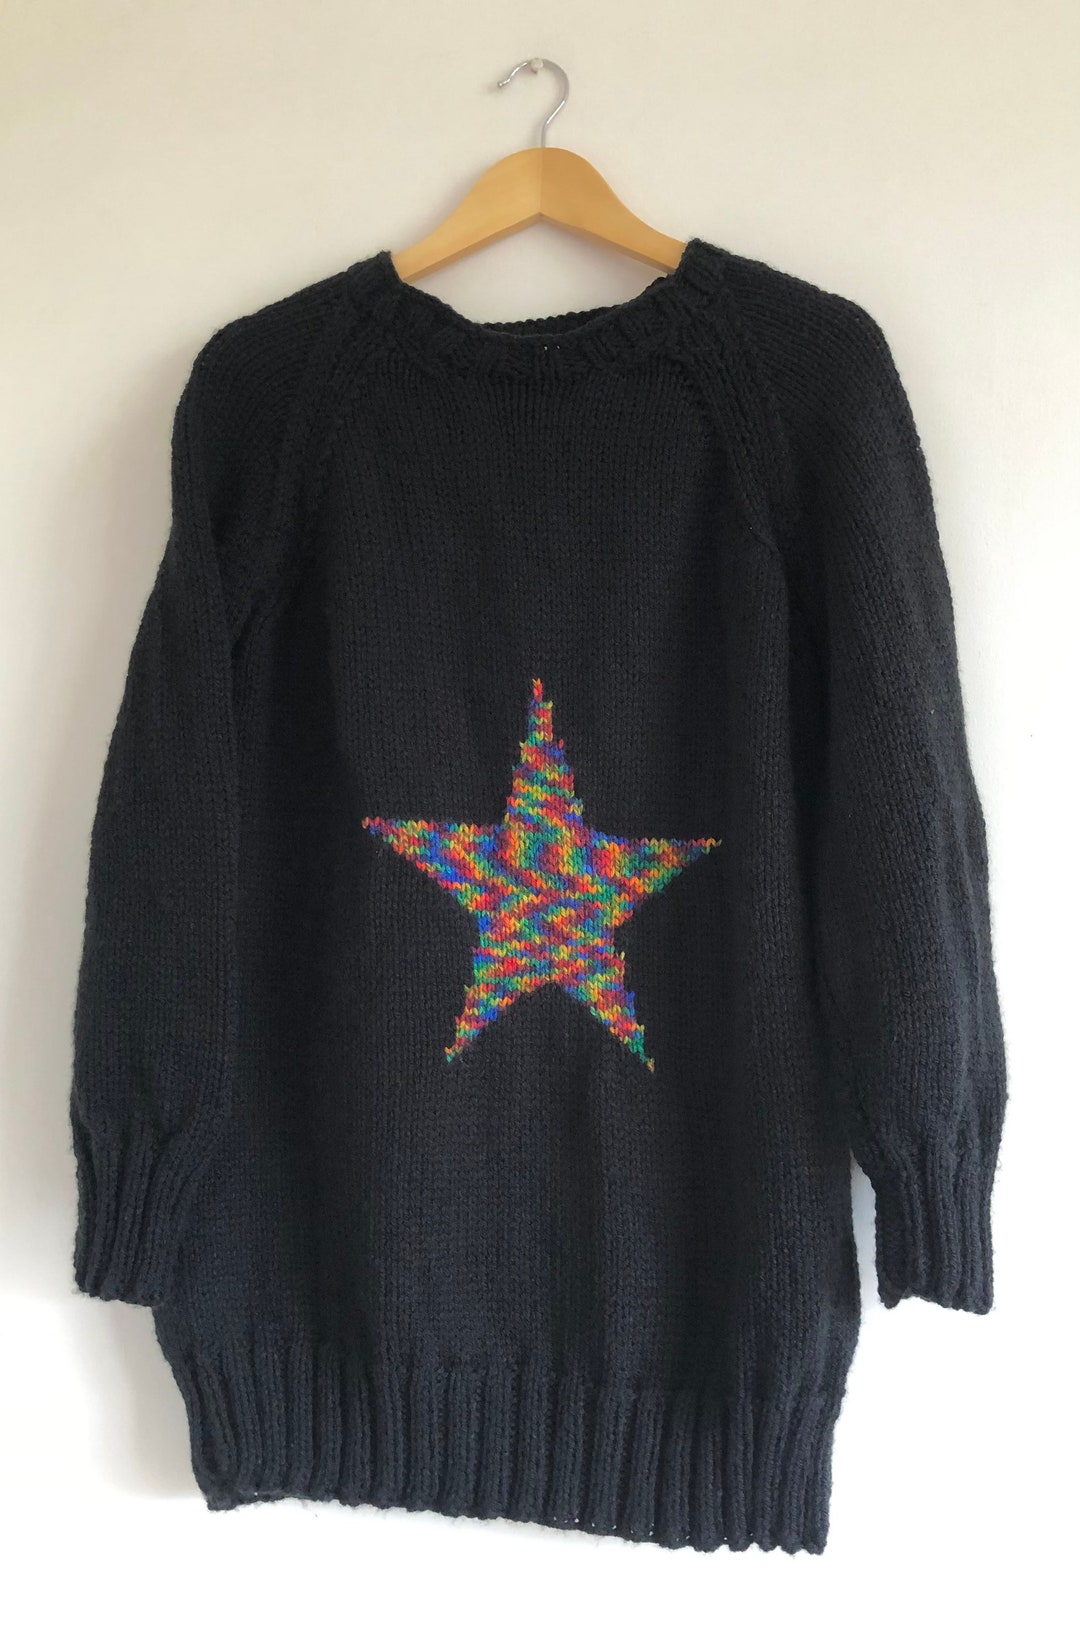 Star Sweater Knitting Pattern - Etsy